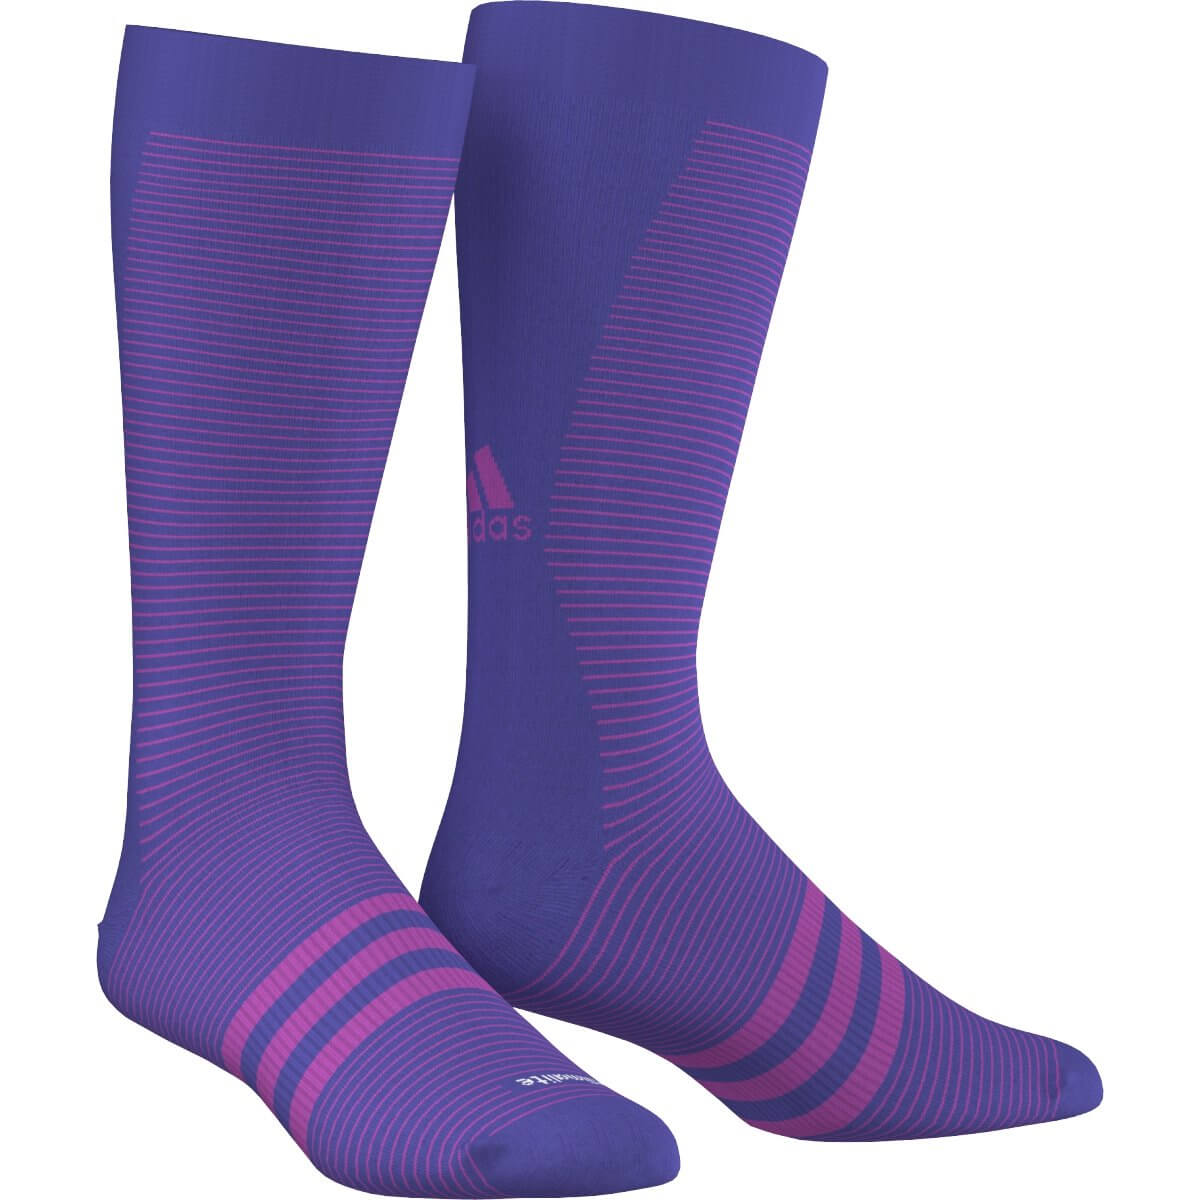 Ponožky adidas infinite series climalite id city socks, 1 pair